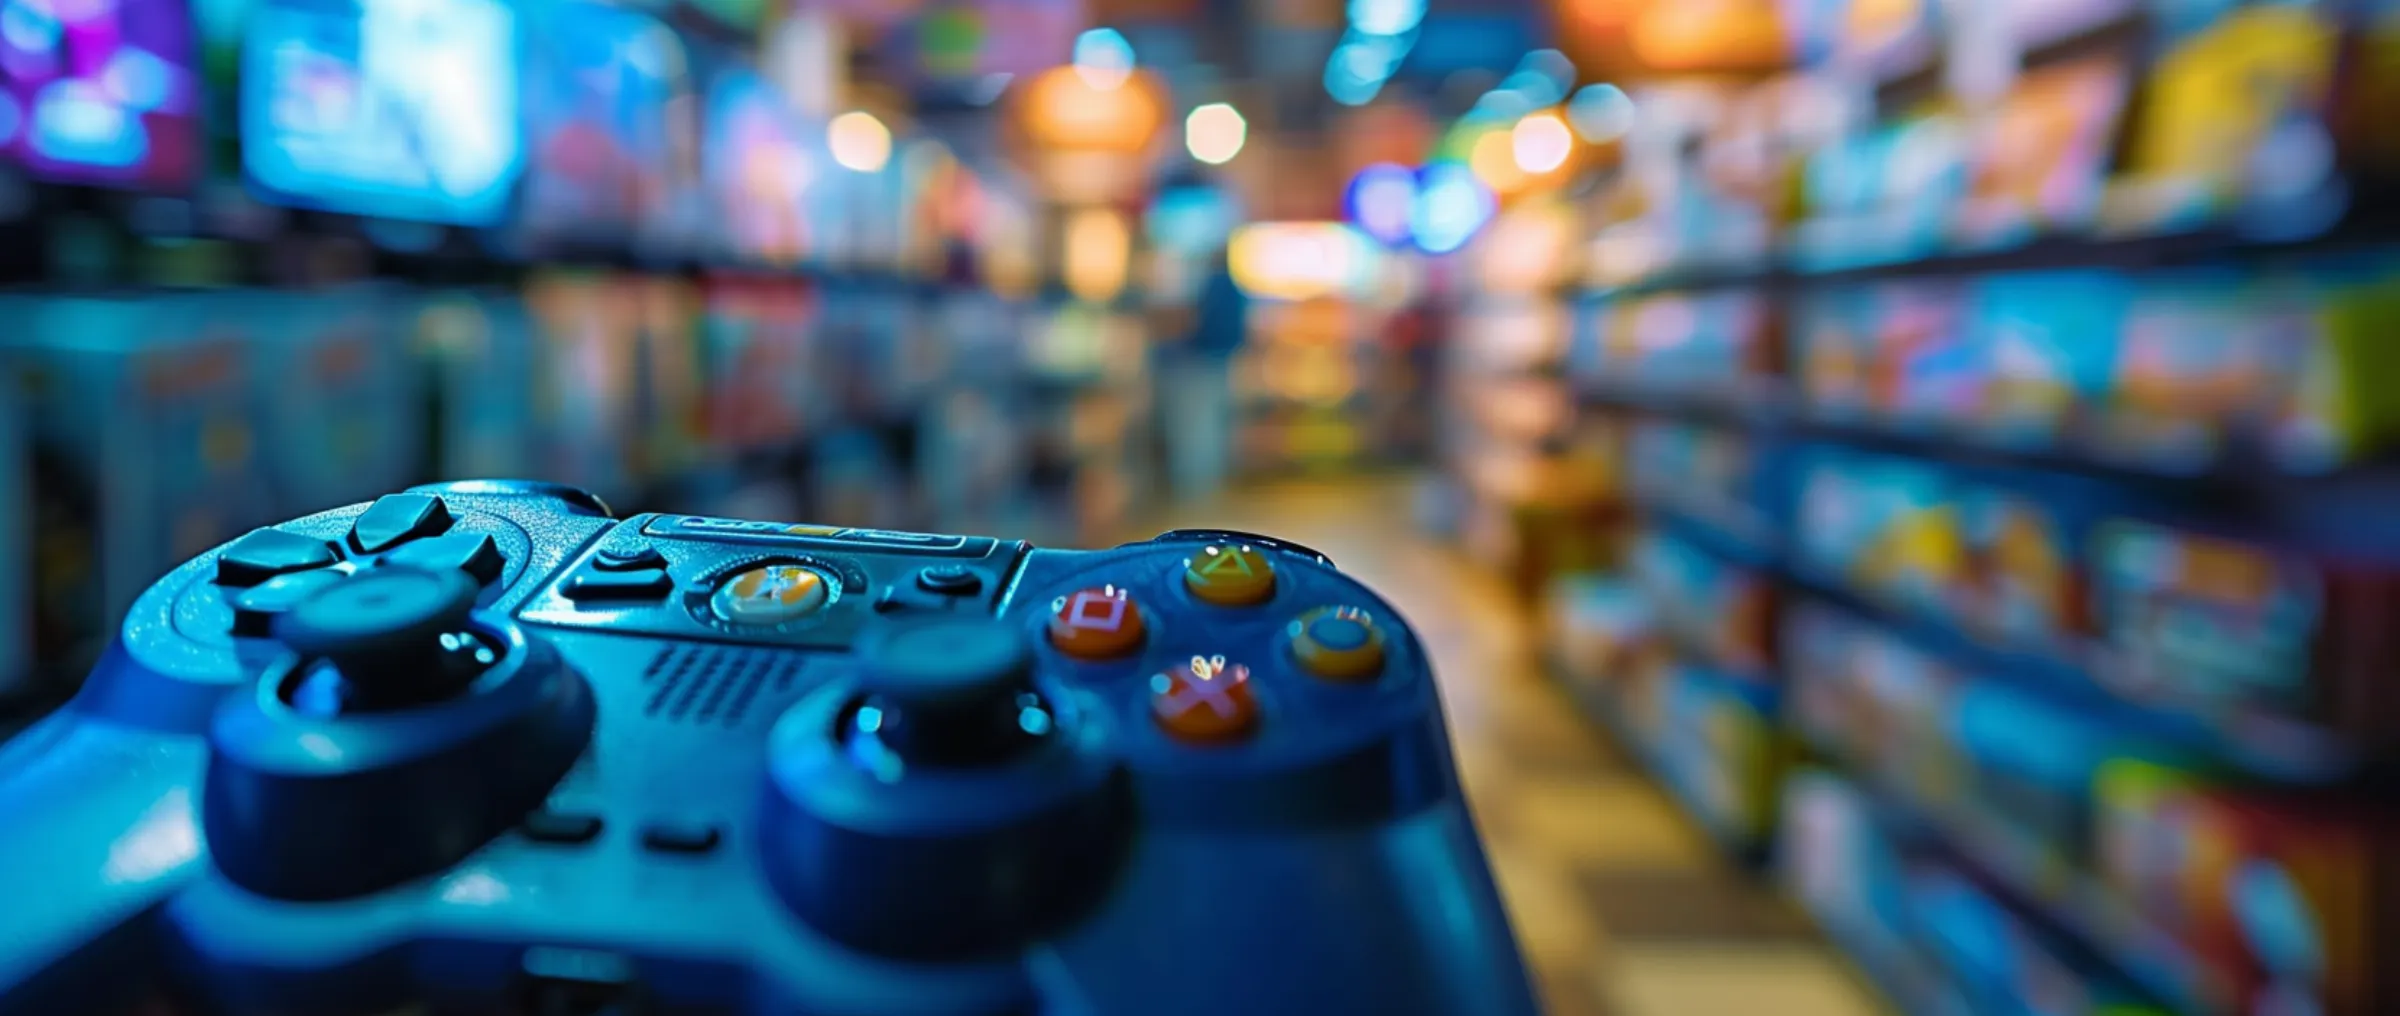 GameStop will close its NFT platform due to regulatory uncertainty